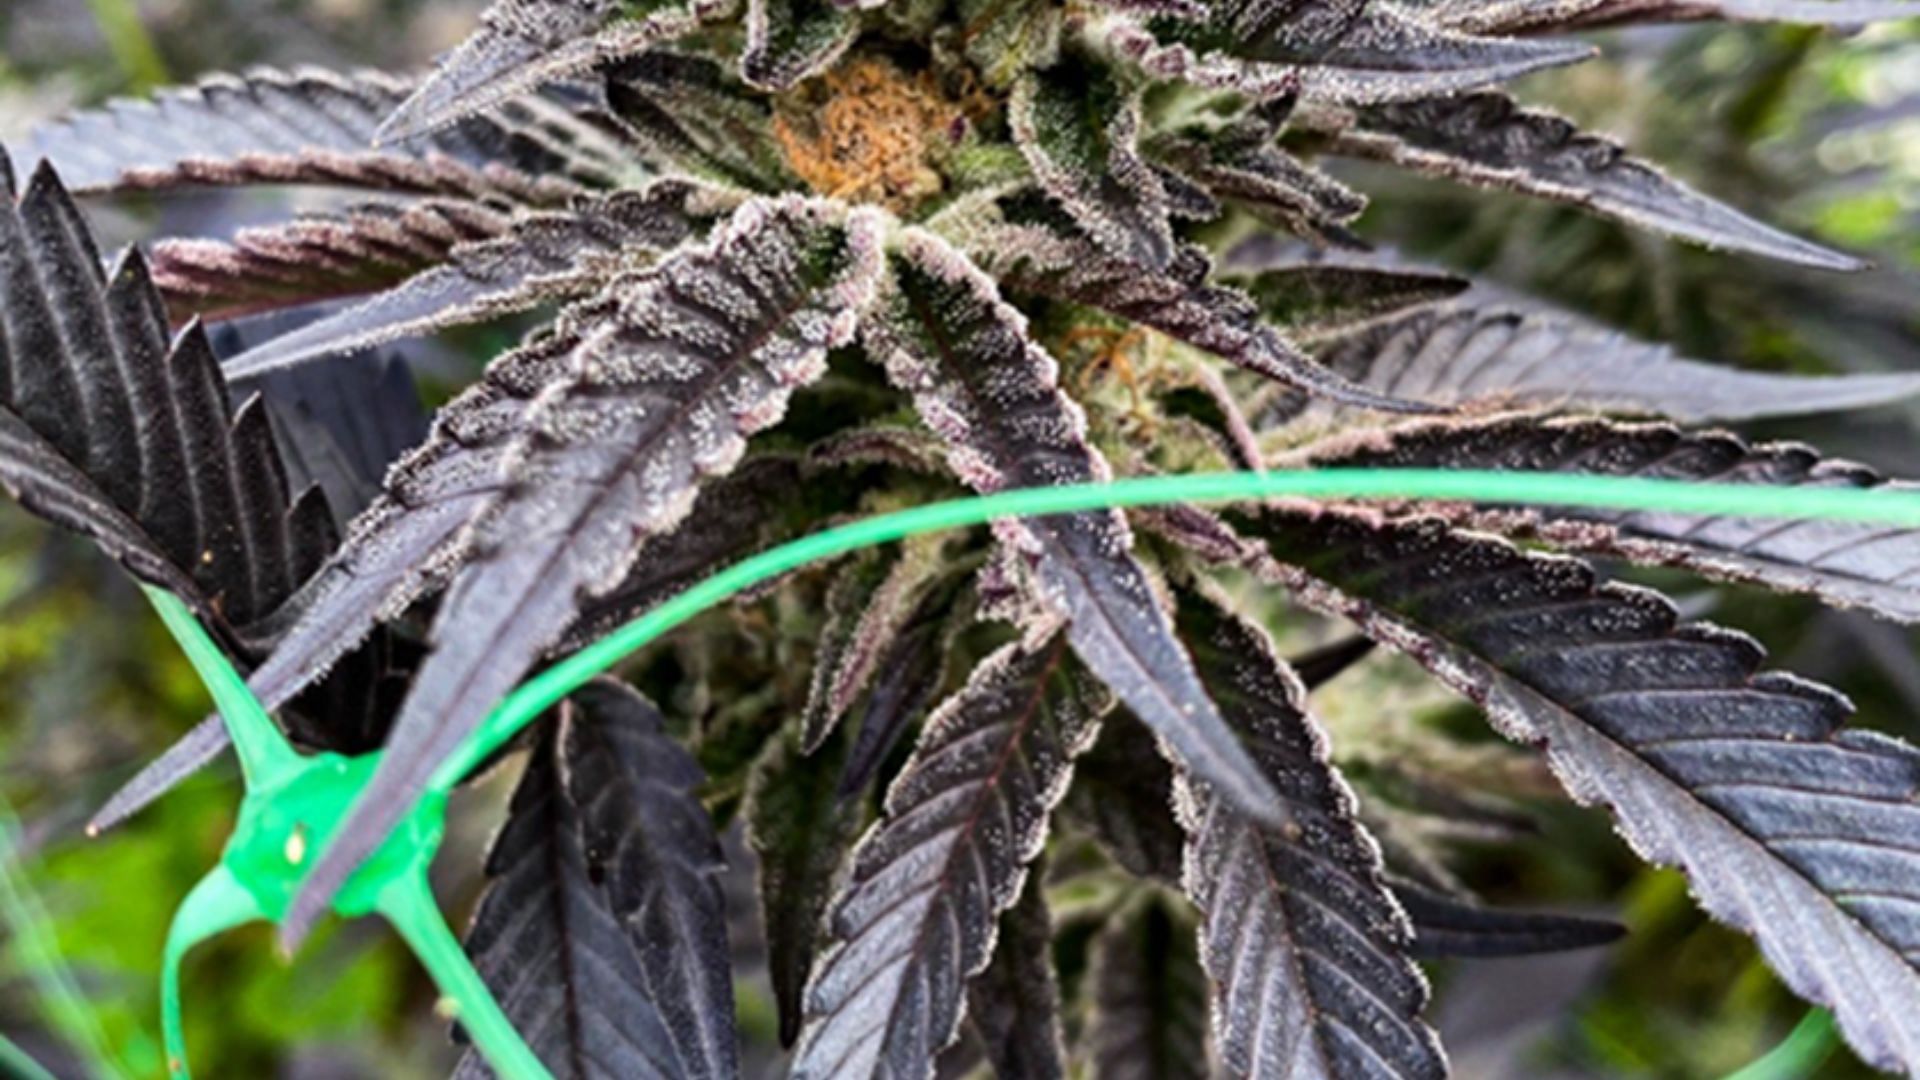 Bud rot on cannabis flower